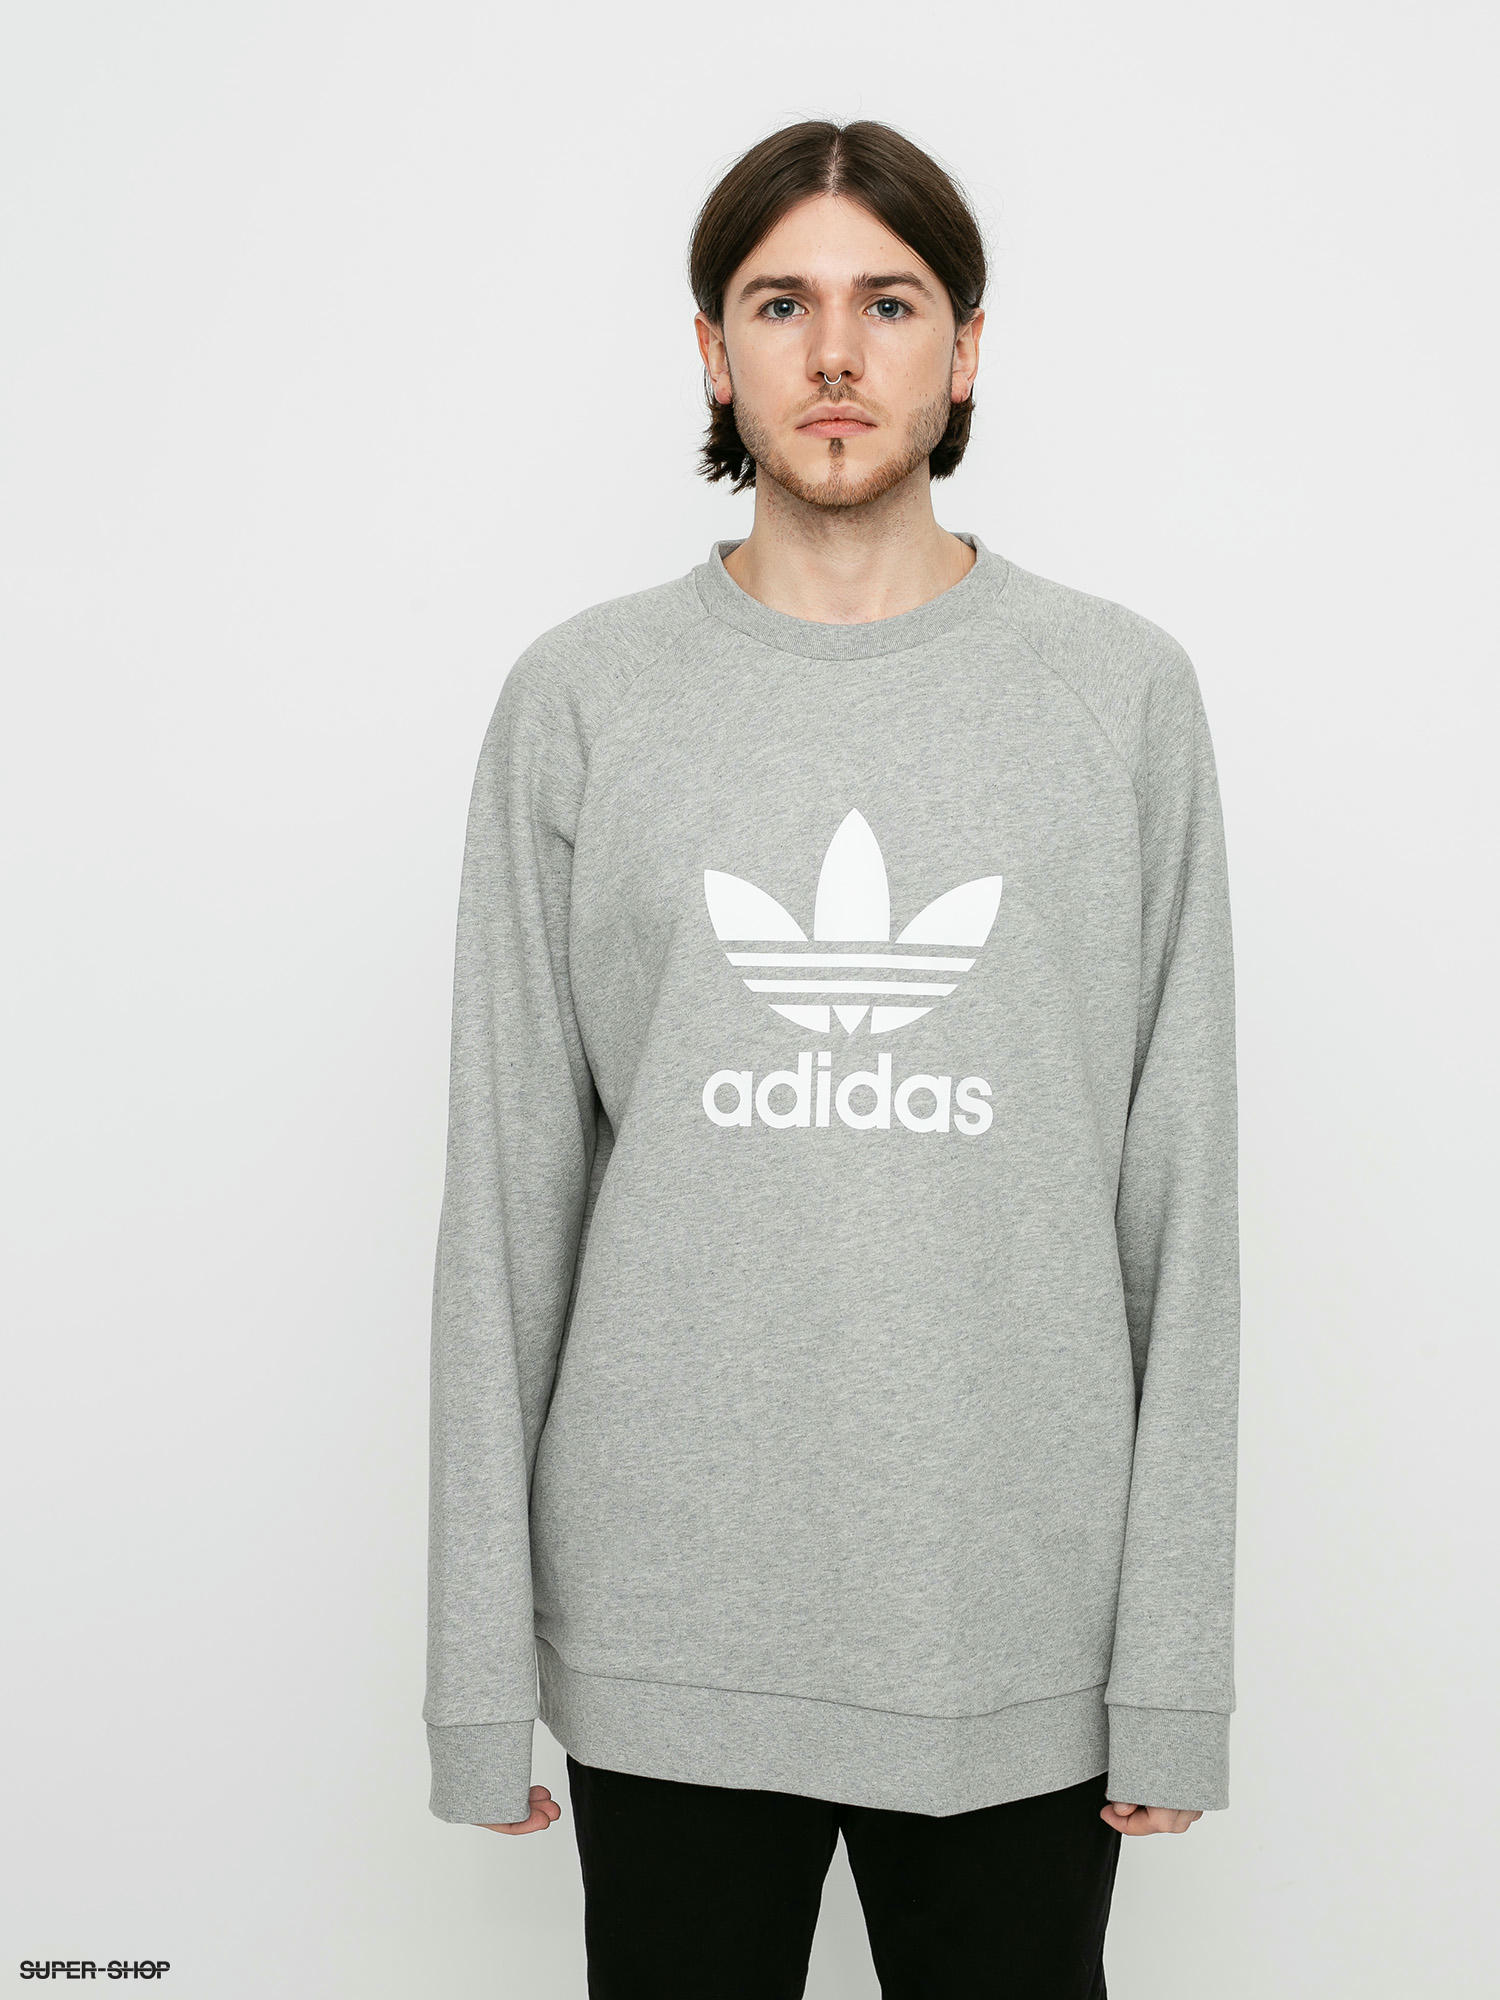 adidas Originals Crew Sweatshirt (medium